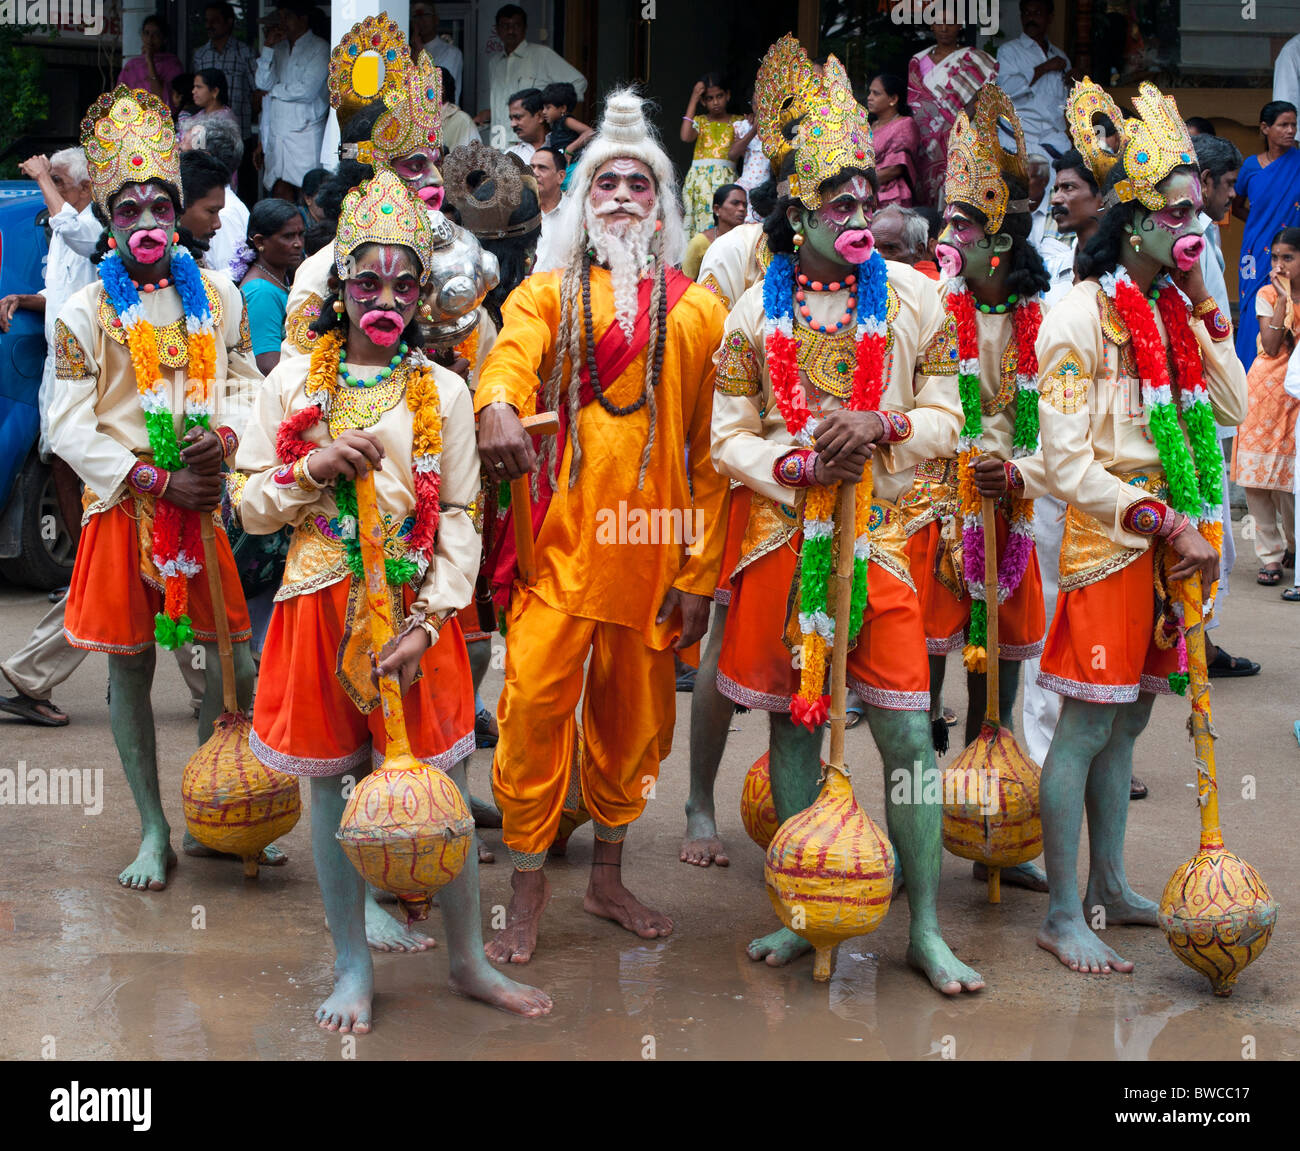 Indian festival street performers dressed as Hanuman, at Sathya Sai Baba 85th birthday celebrations in Puttaparthi, Andhra Pradesh, India Stock Photo